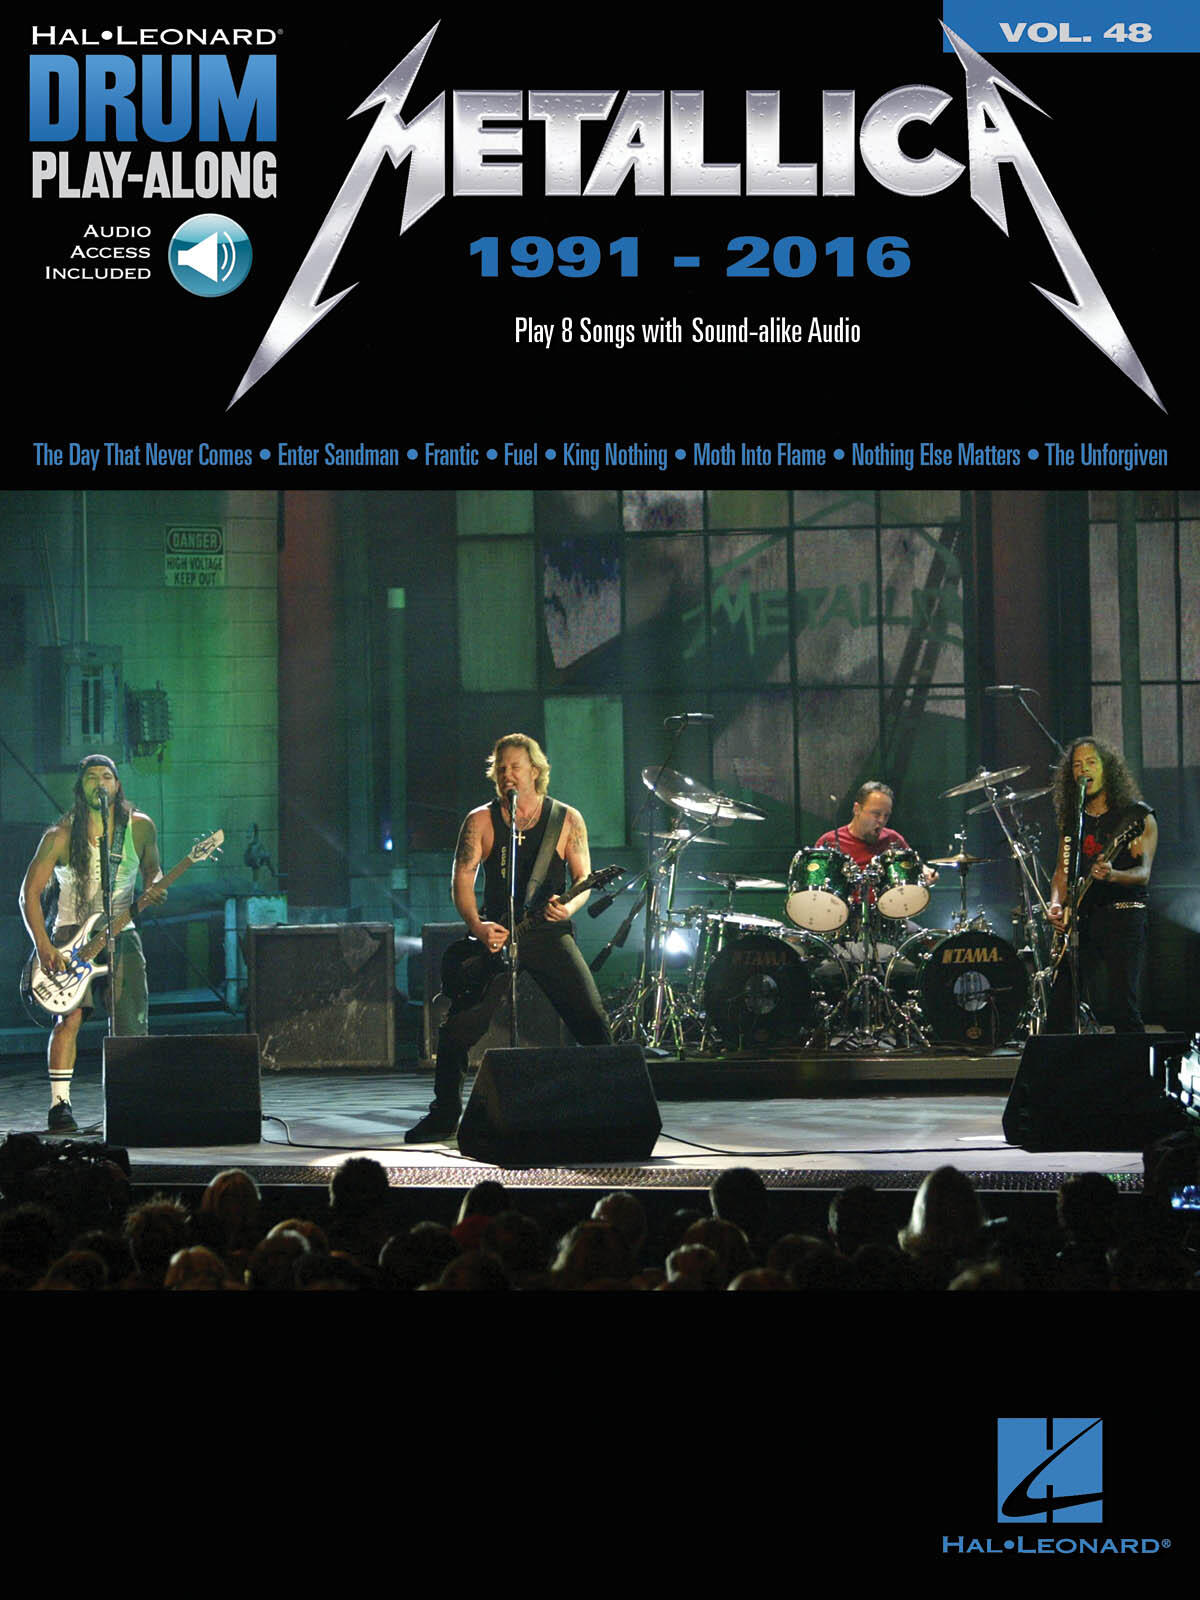 Metallica: 1991-2016 Drum Play-Along Volume 48 : photo 1